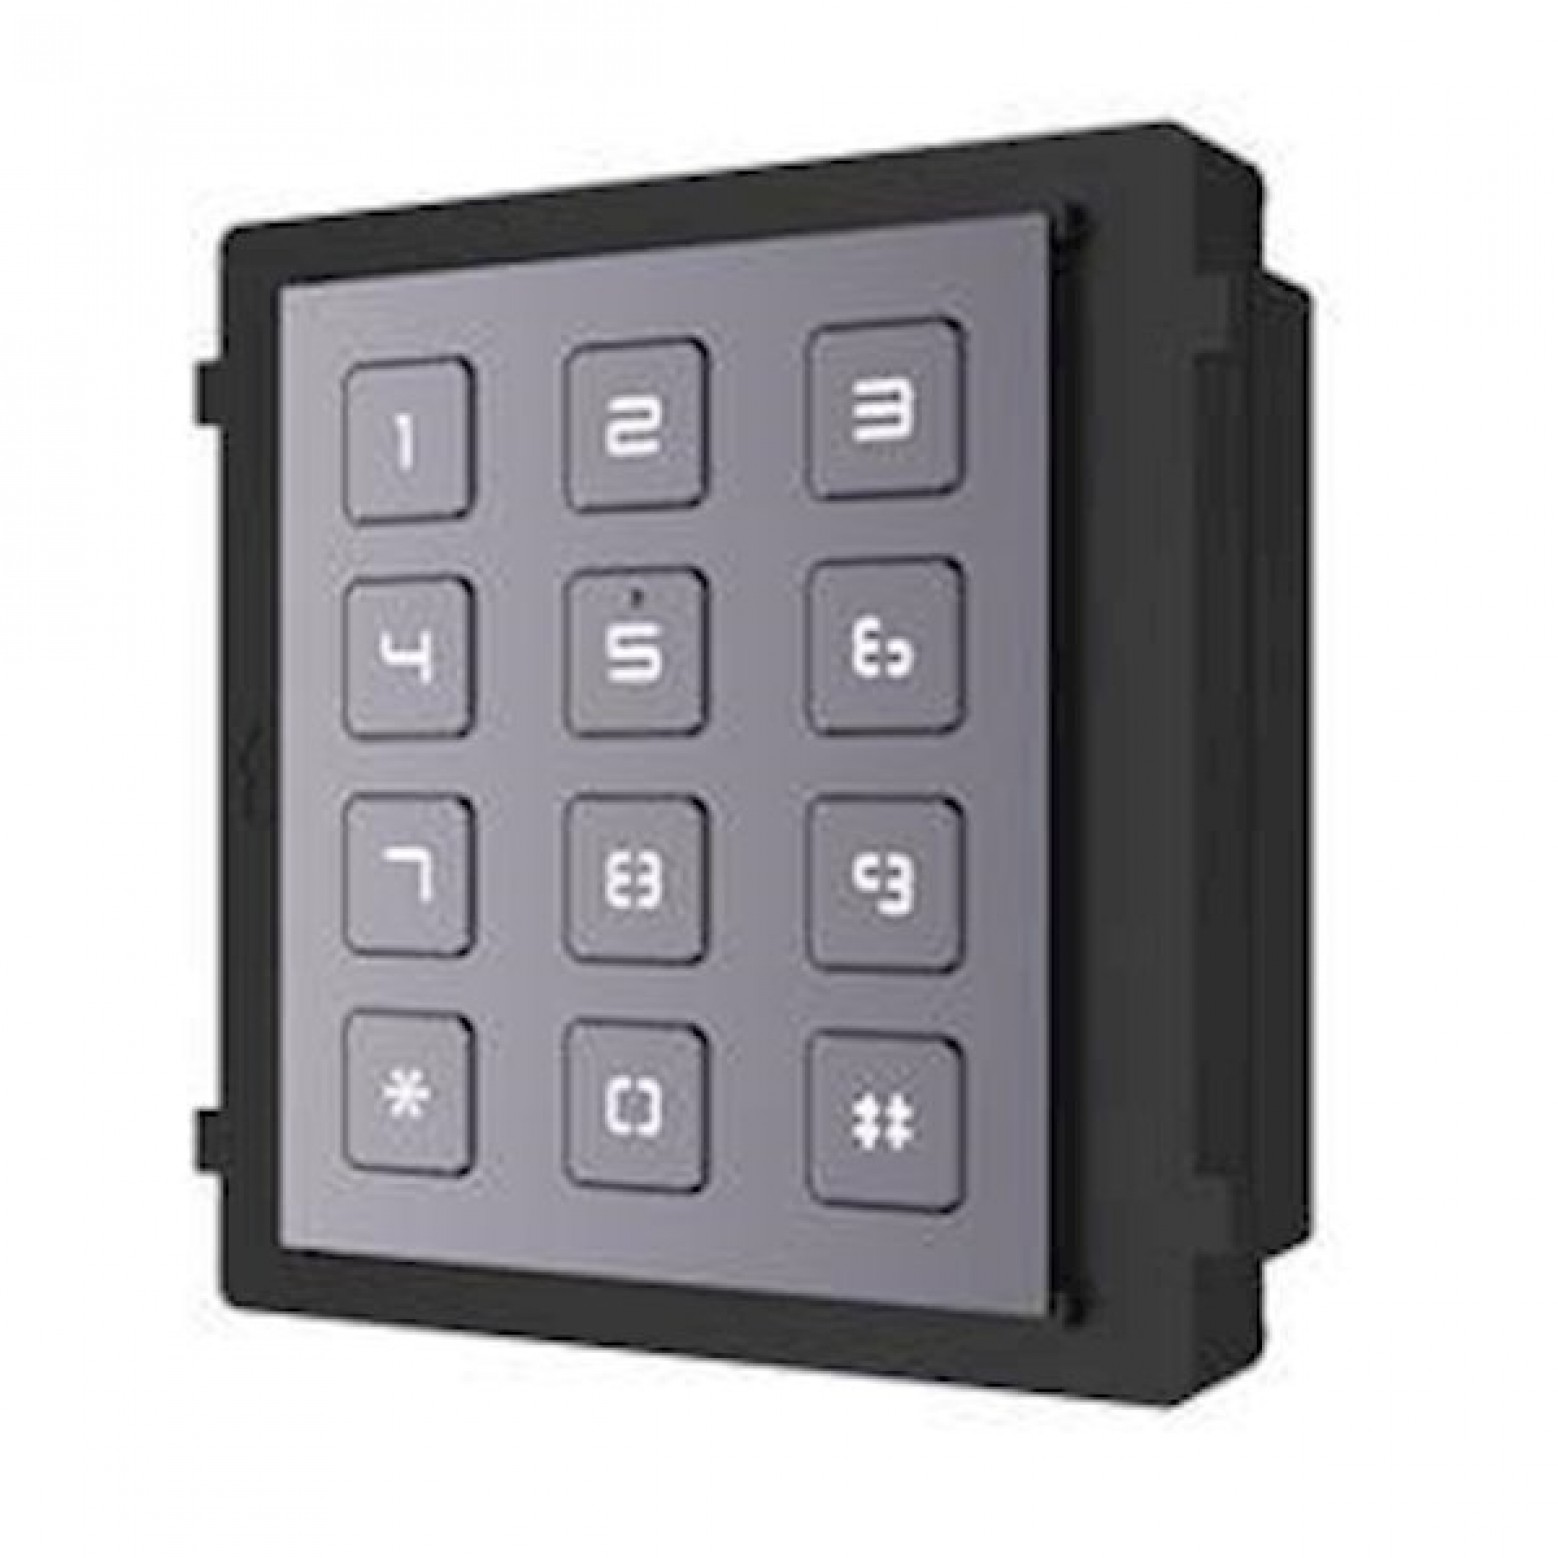 Hikvision DS-KD-KP intercom module keypad